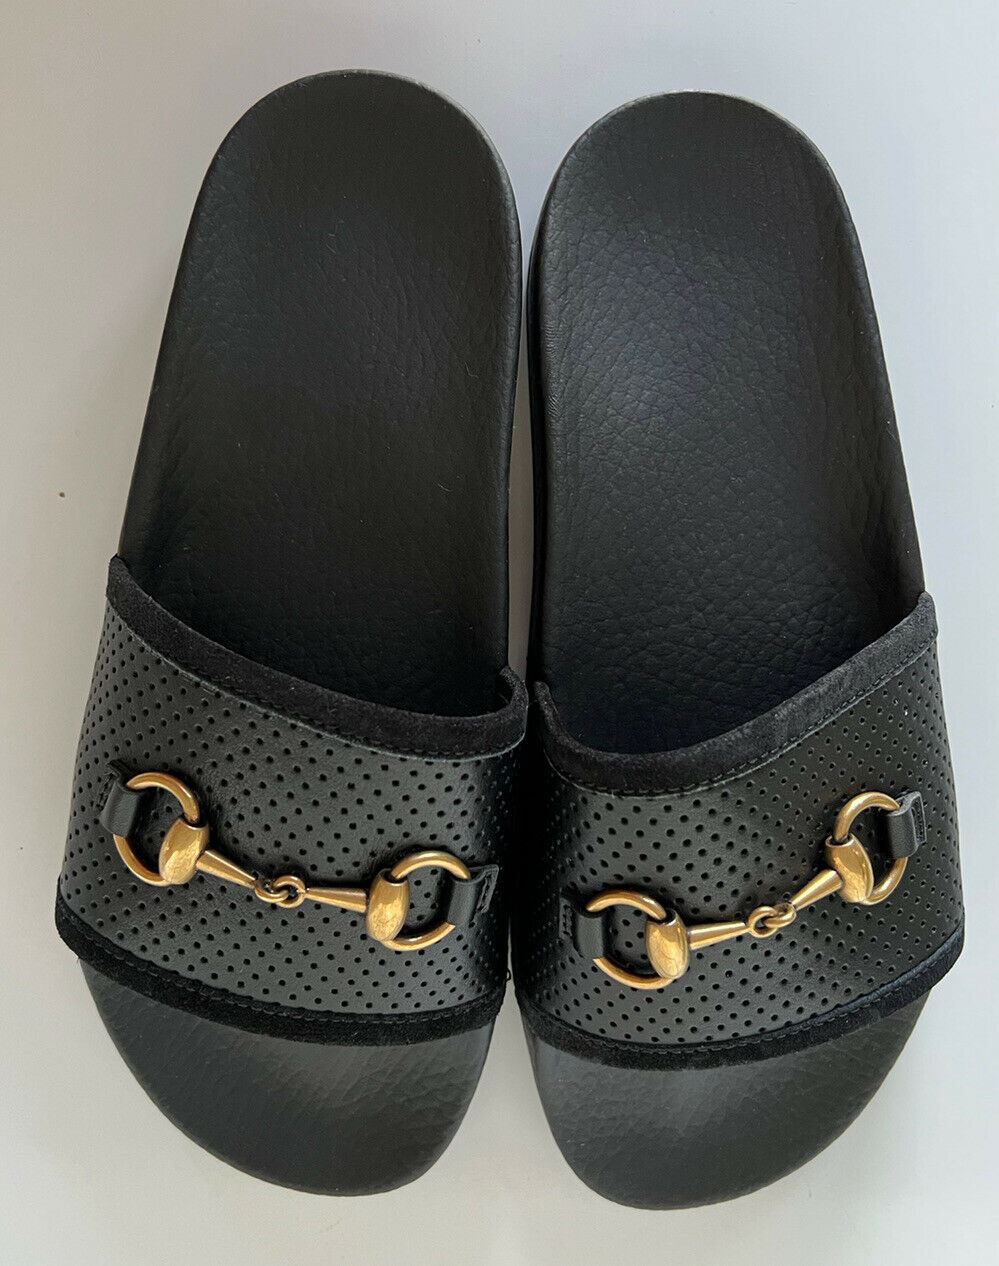 NIB Gucci Women's Horsebit Leather Slip On Black Sandals 8 US (38 Eu) IT 498265